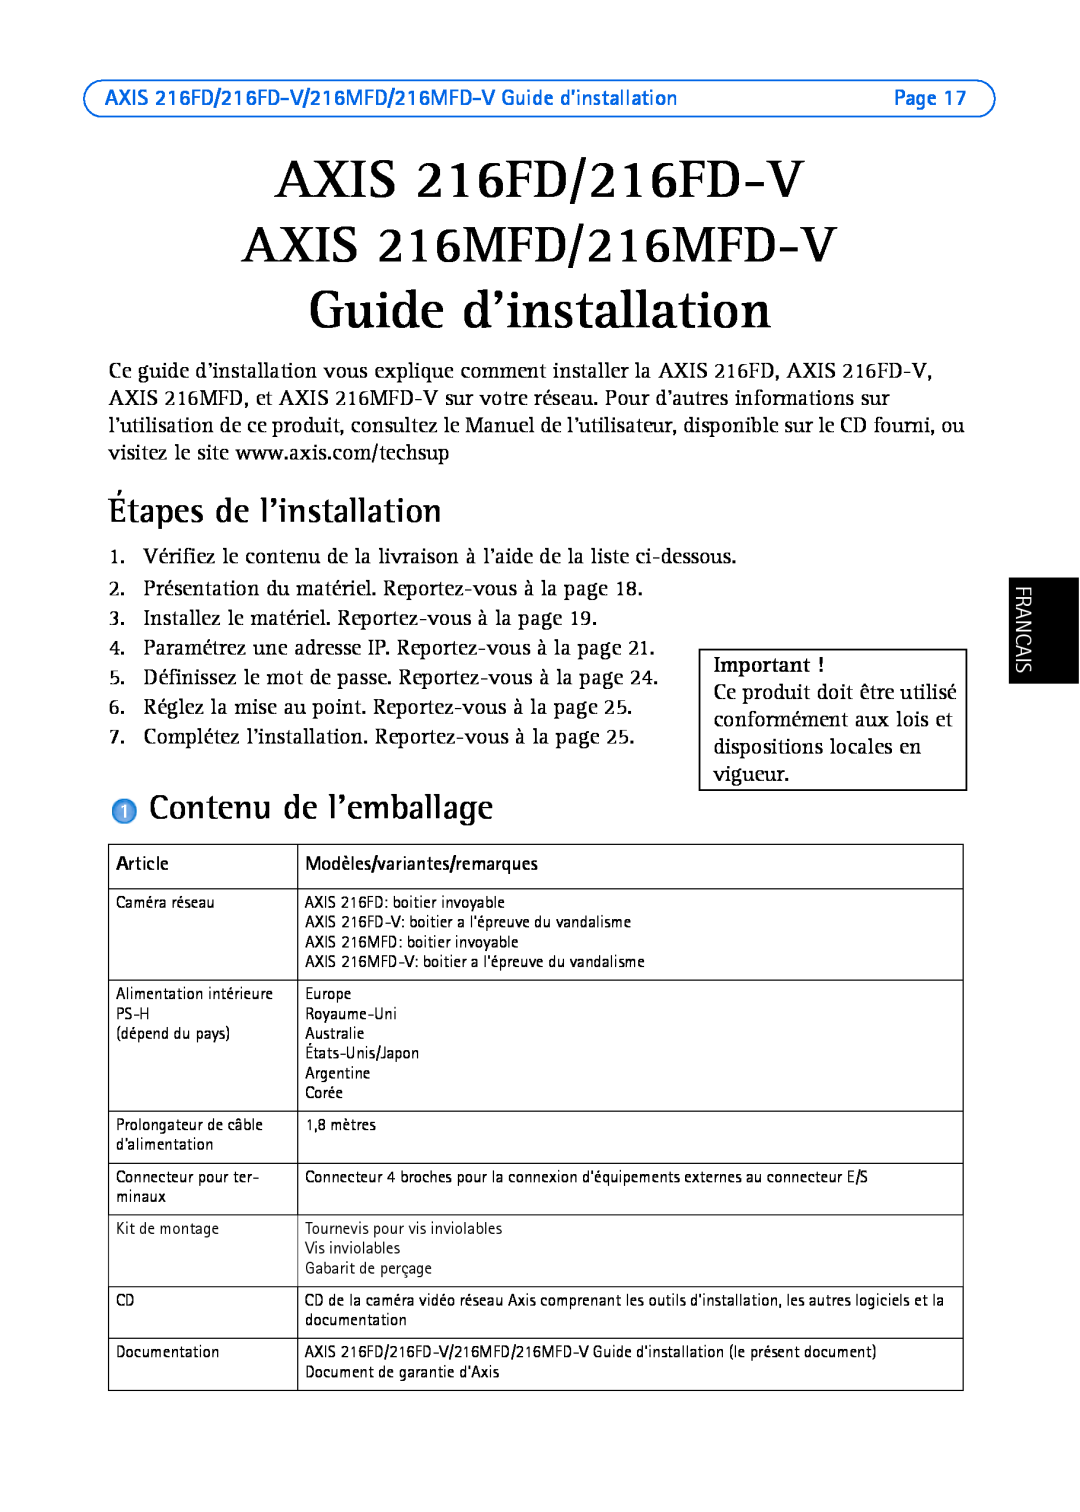 Axis Communications AXIS 216MFD AXIS 216FD/216FD-V, Guide dinstallation, Étapes de linstallation, Contenu de lemballage 